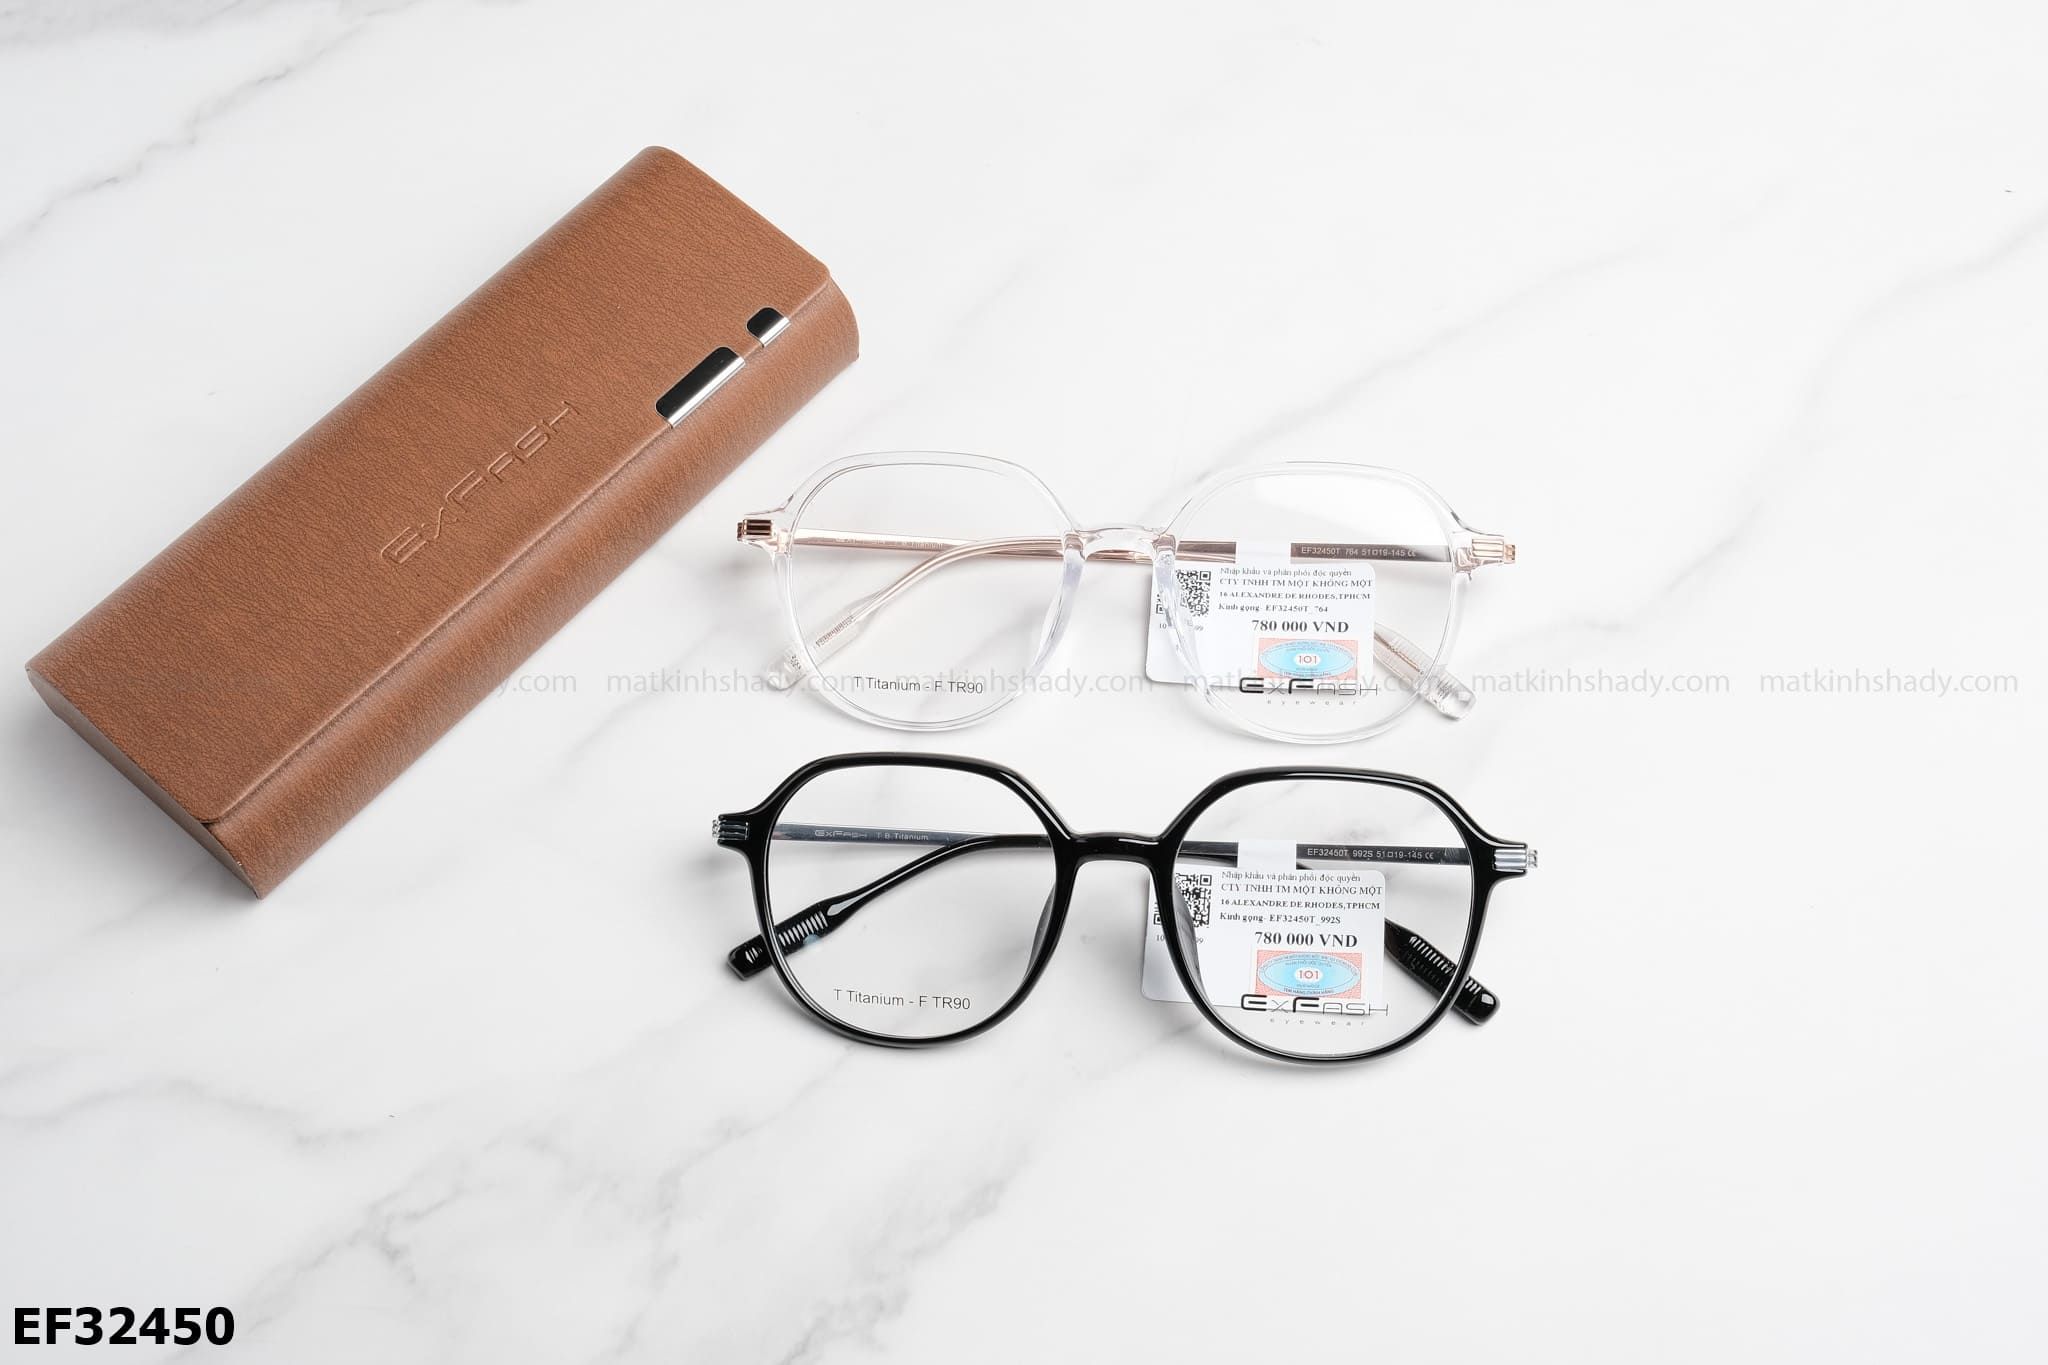  Exfash Eyewear - Glasses - EF32450 